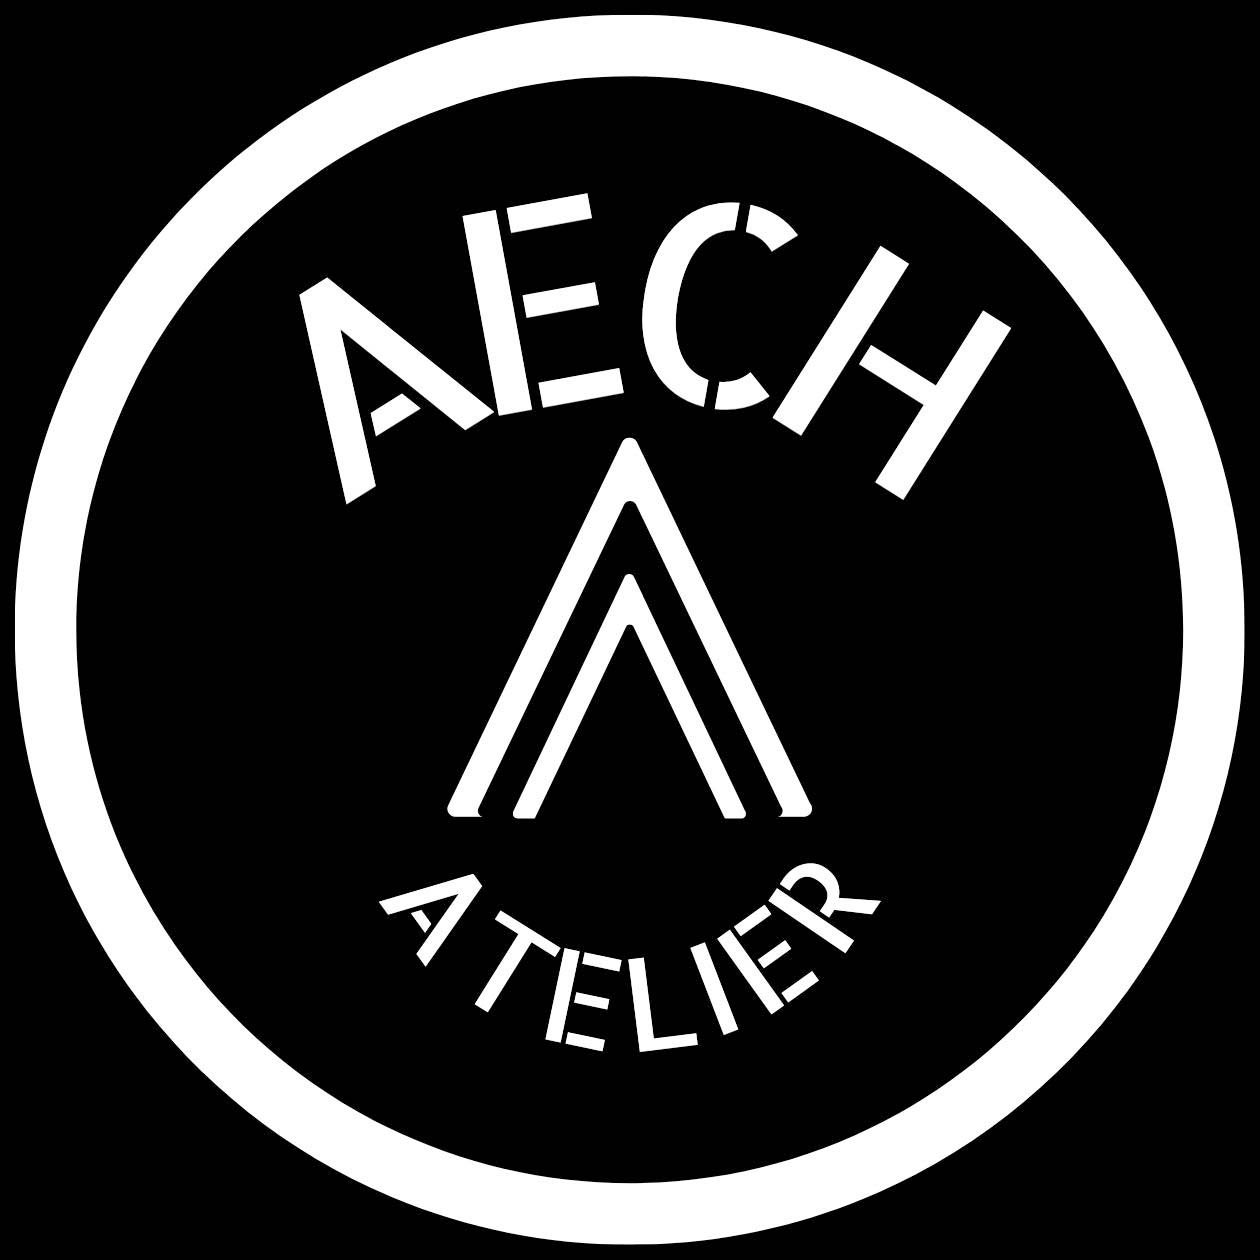 AECH ATELIER